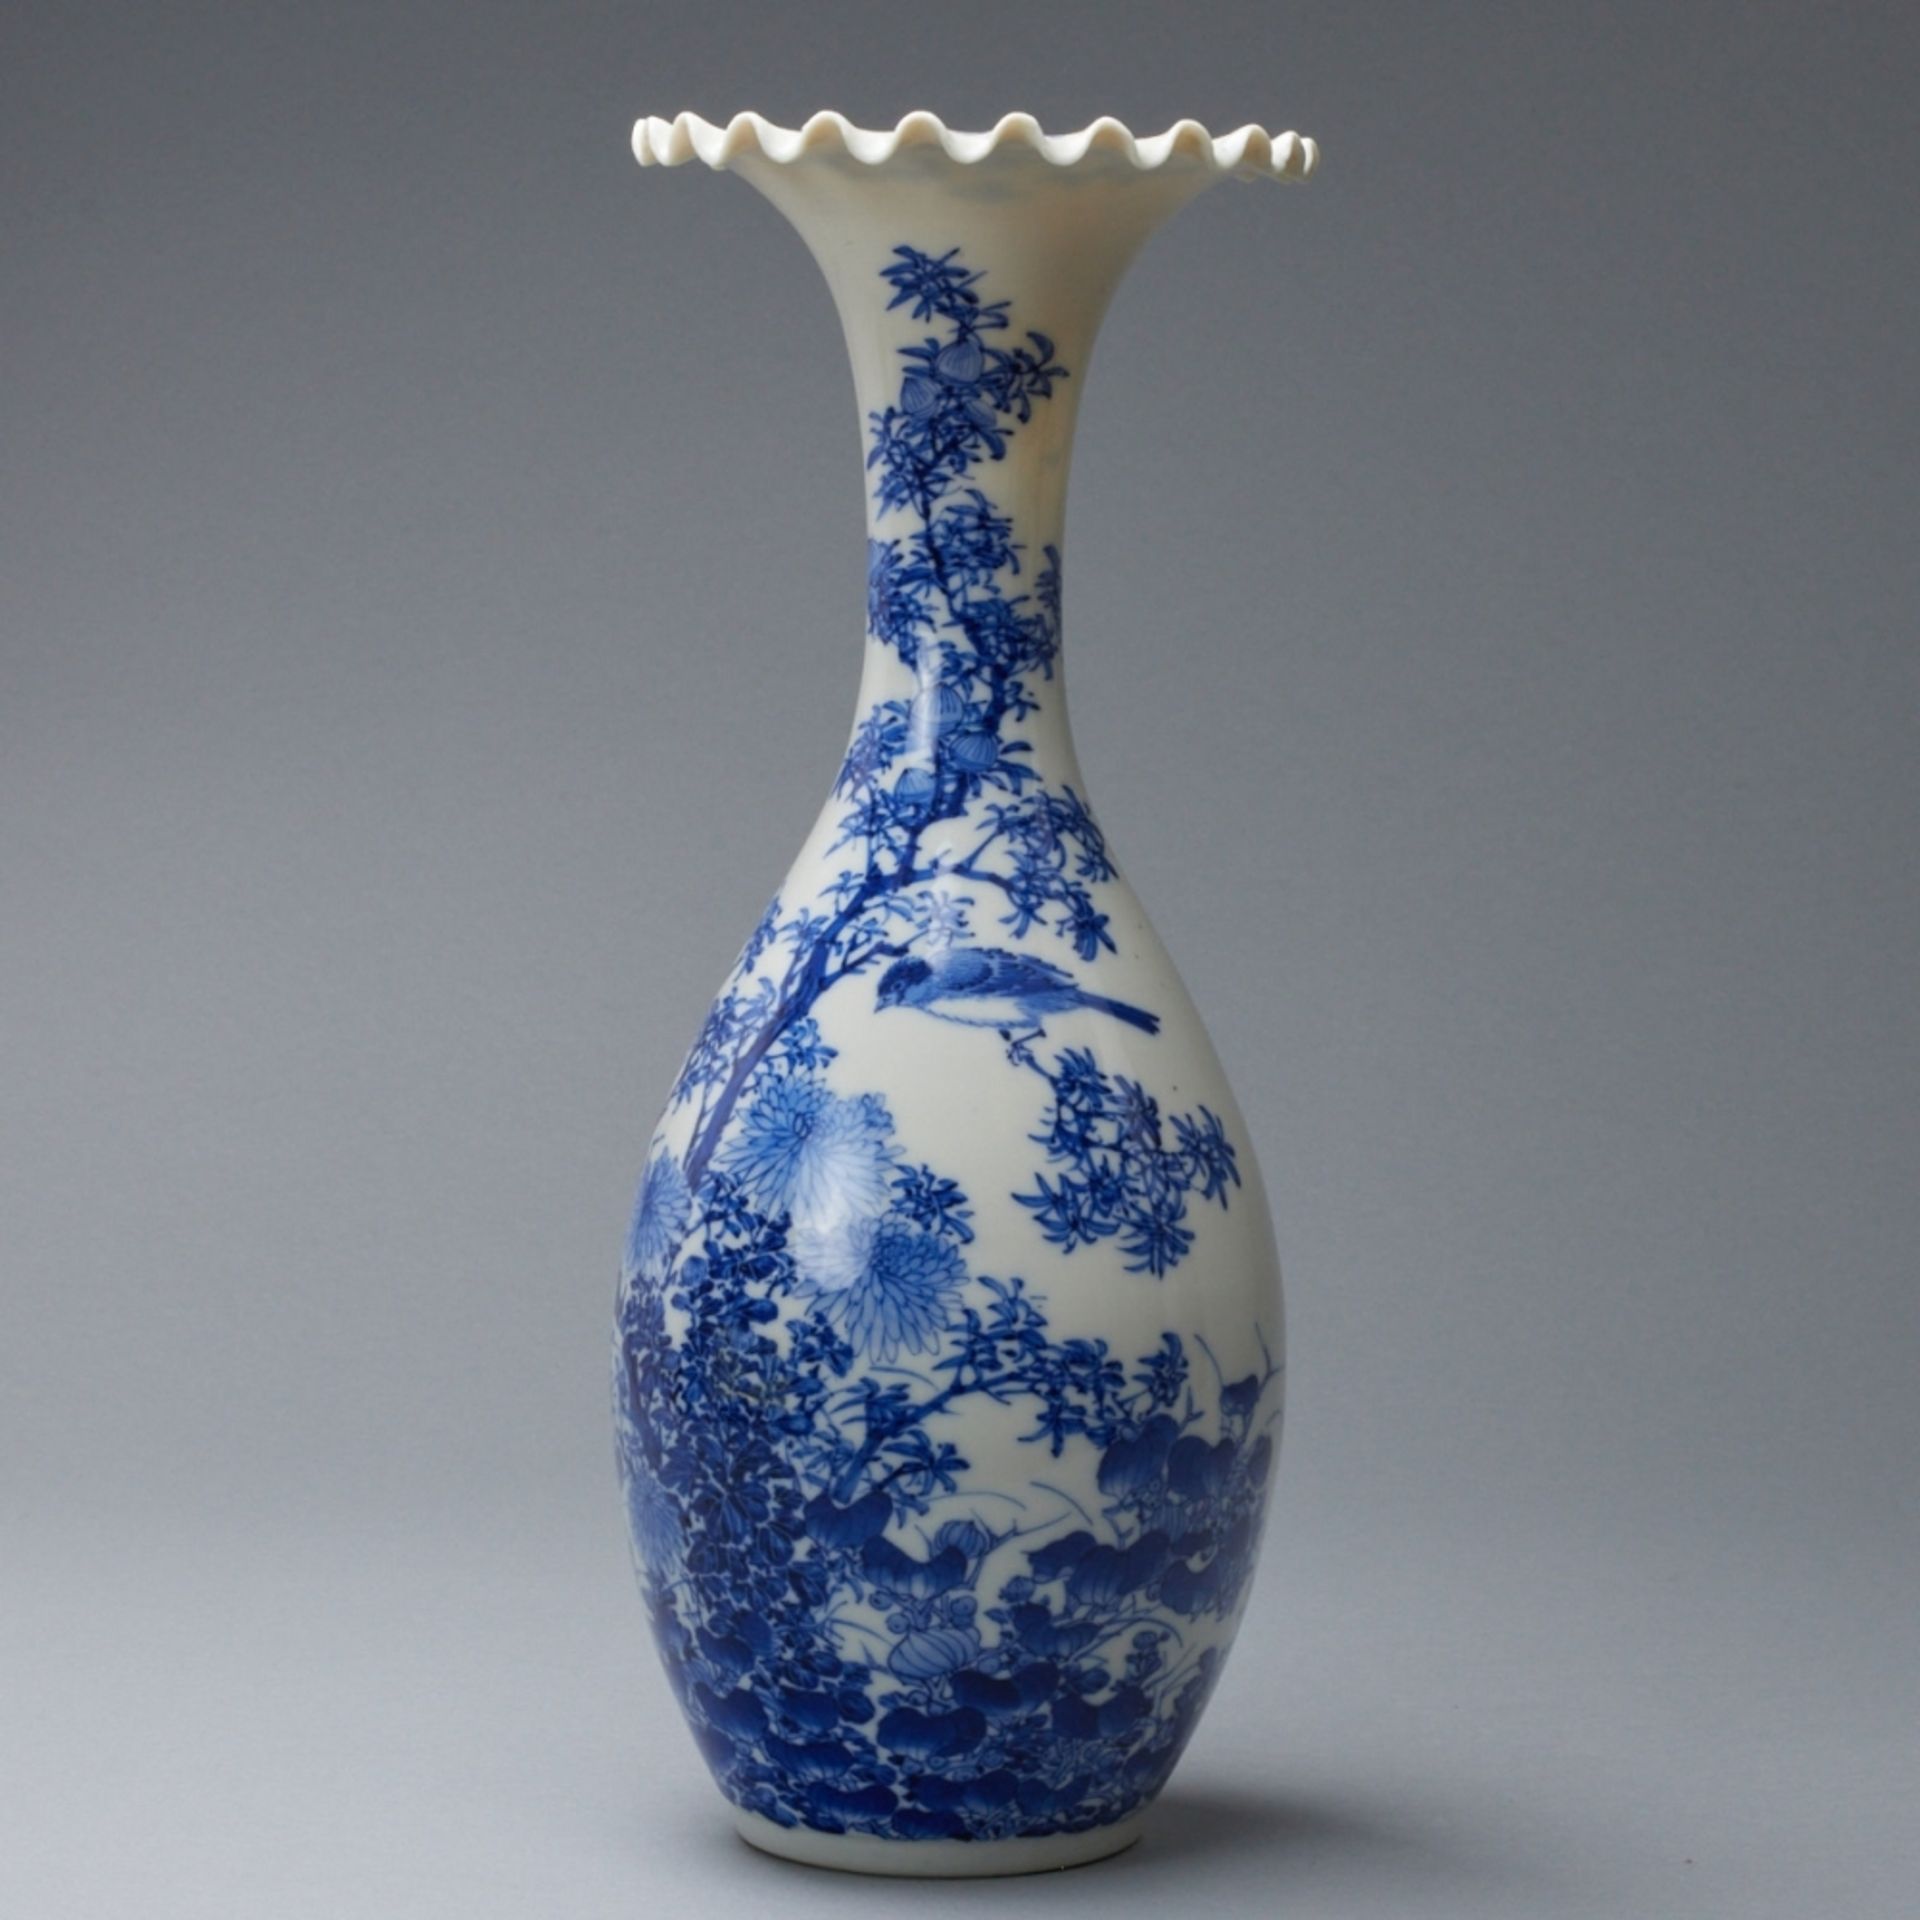 Vase mit Vogeldekor, Japan, wohl erste Hälfte 20. Jahrhundert - Image 3 of 4